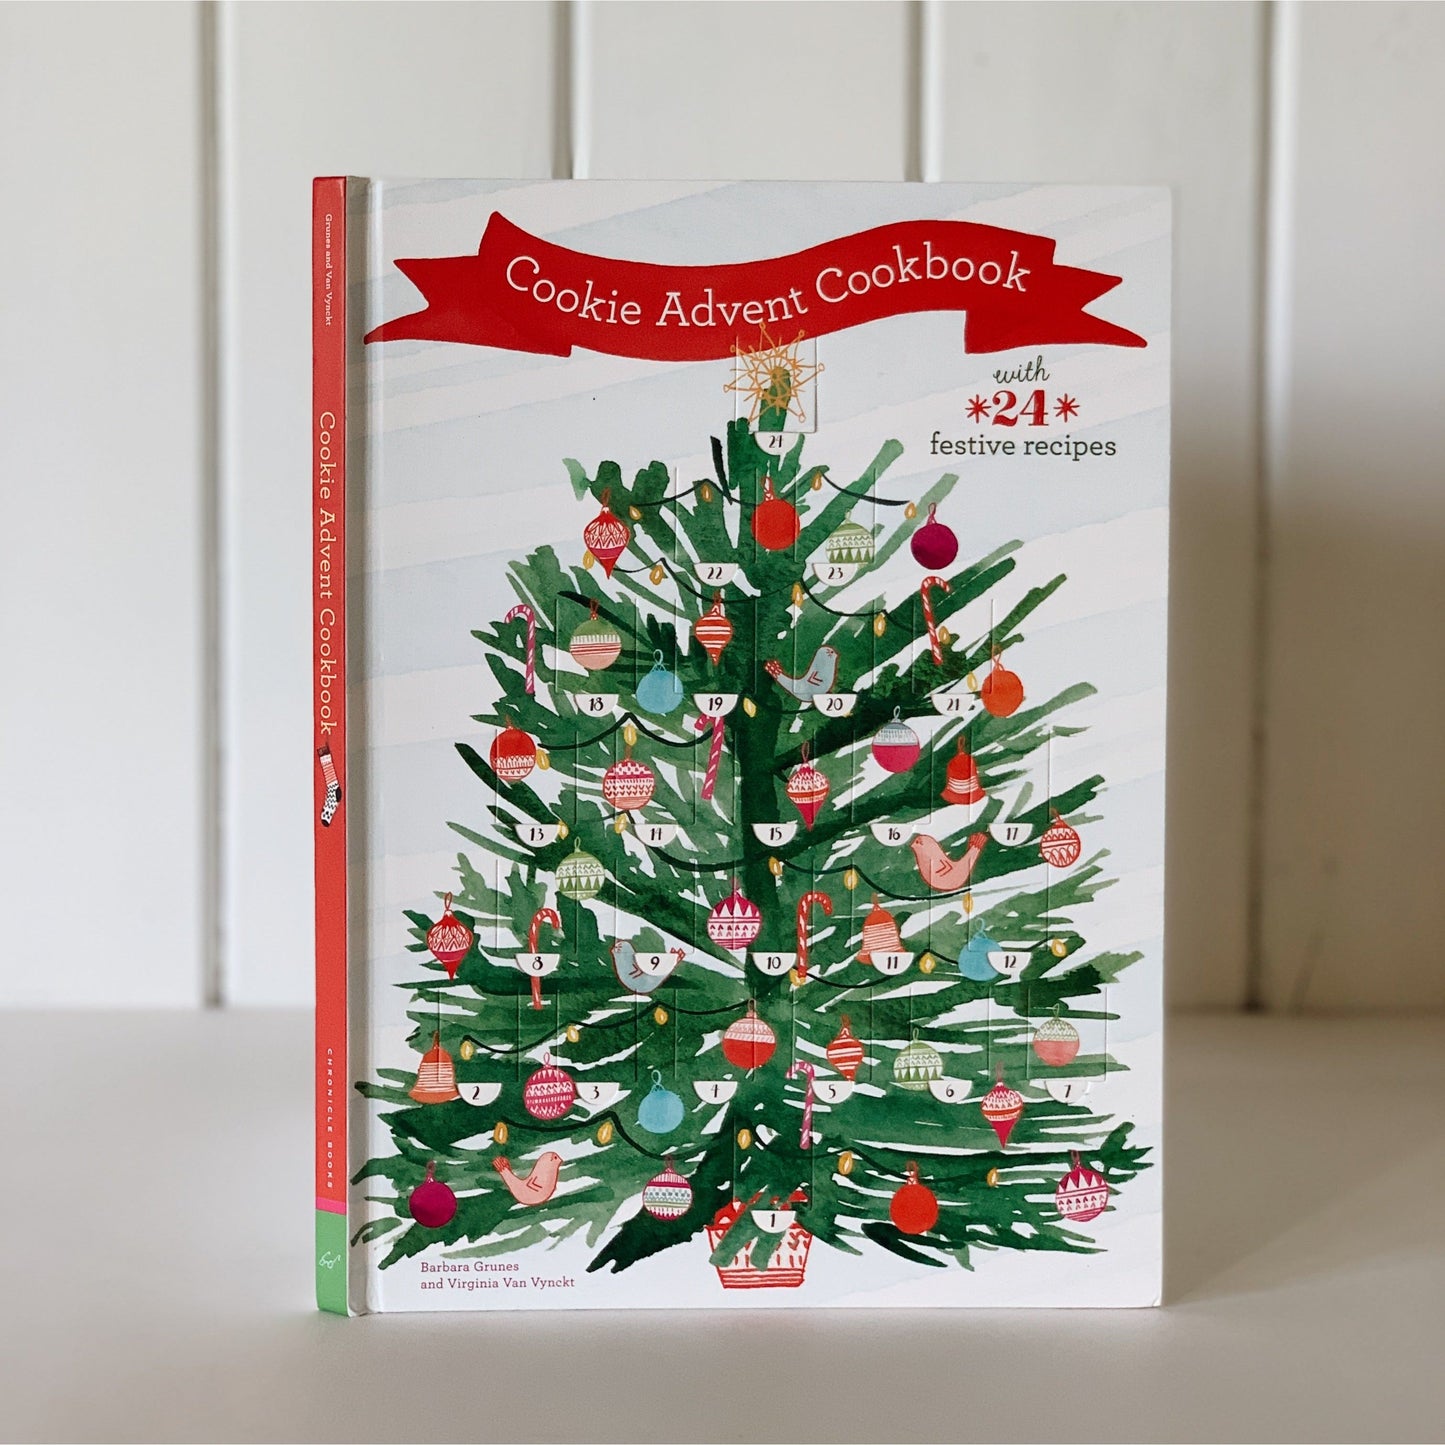 Cookie Advent Cookbook, 2016 Cookie Recipe Book